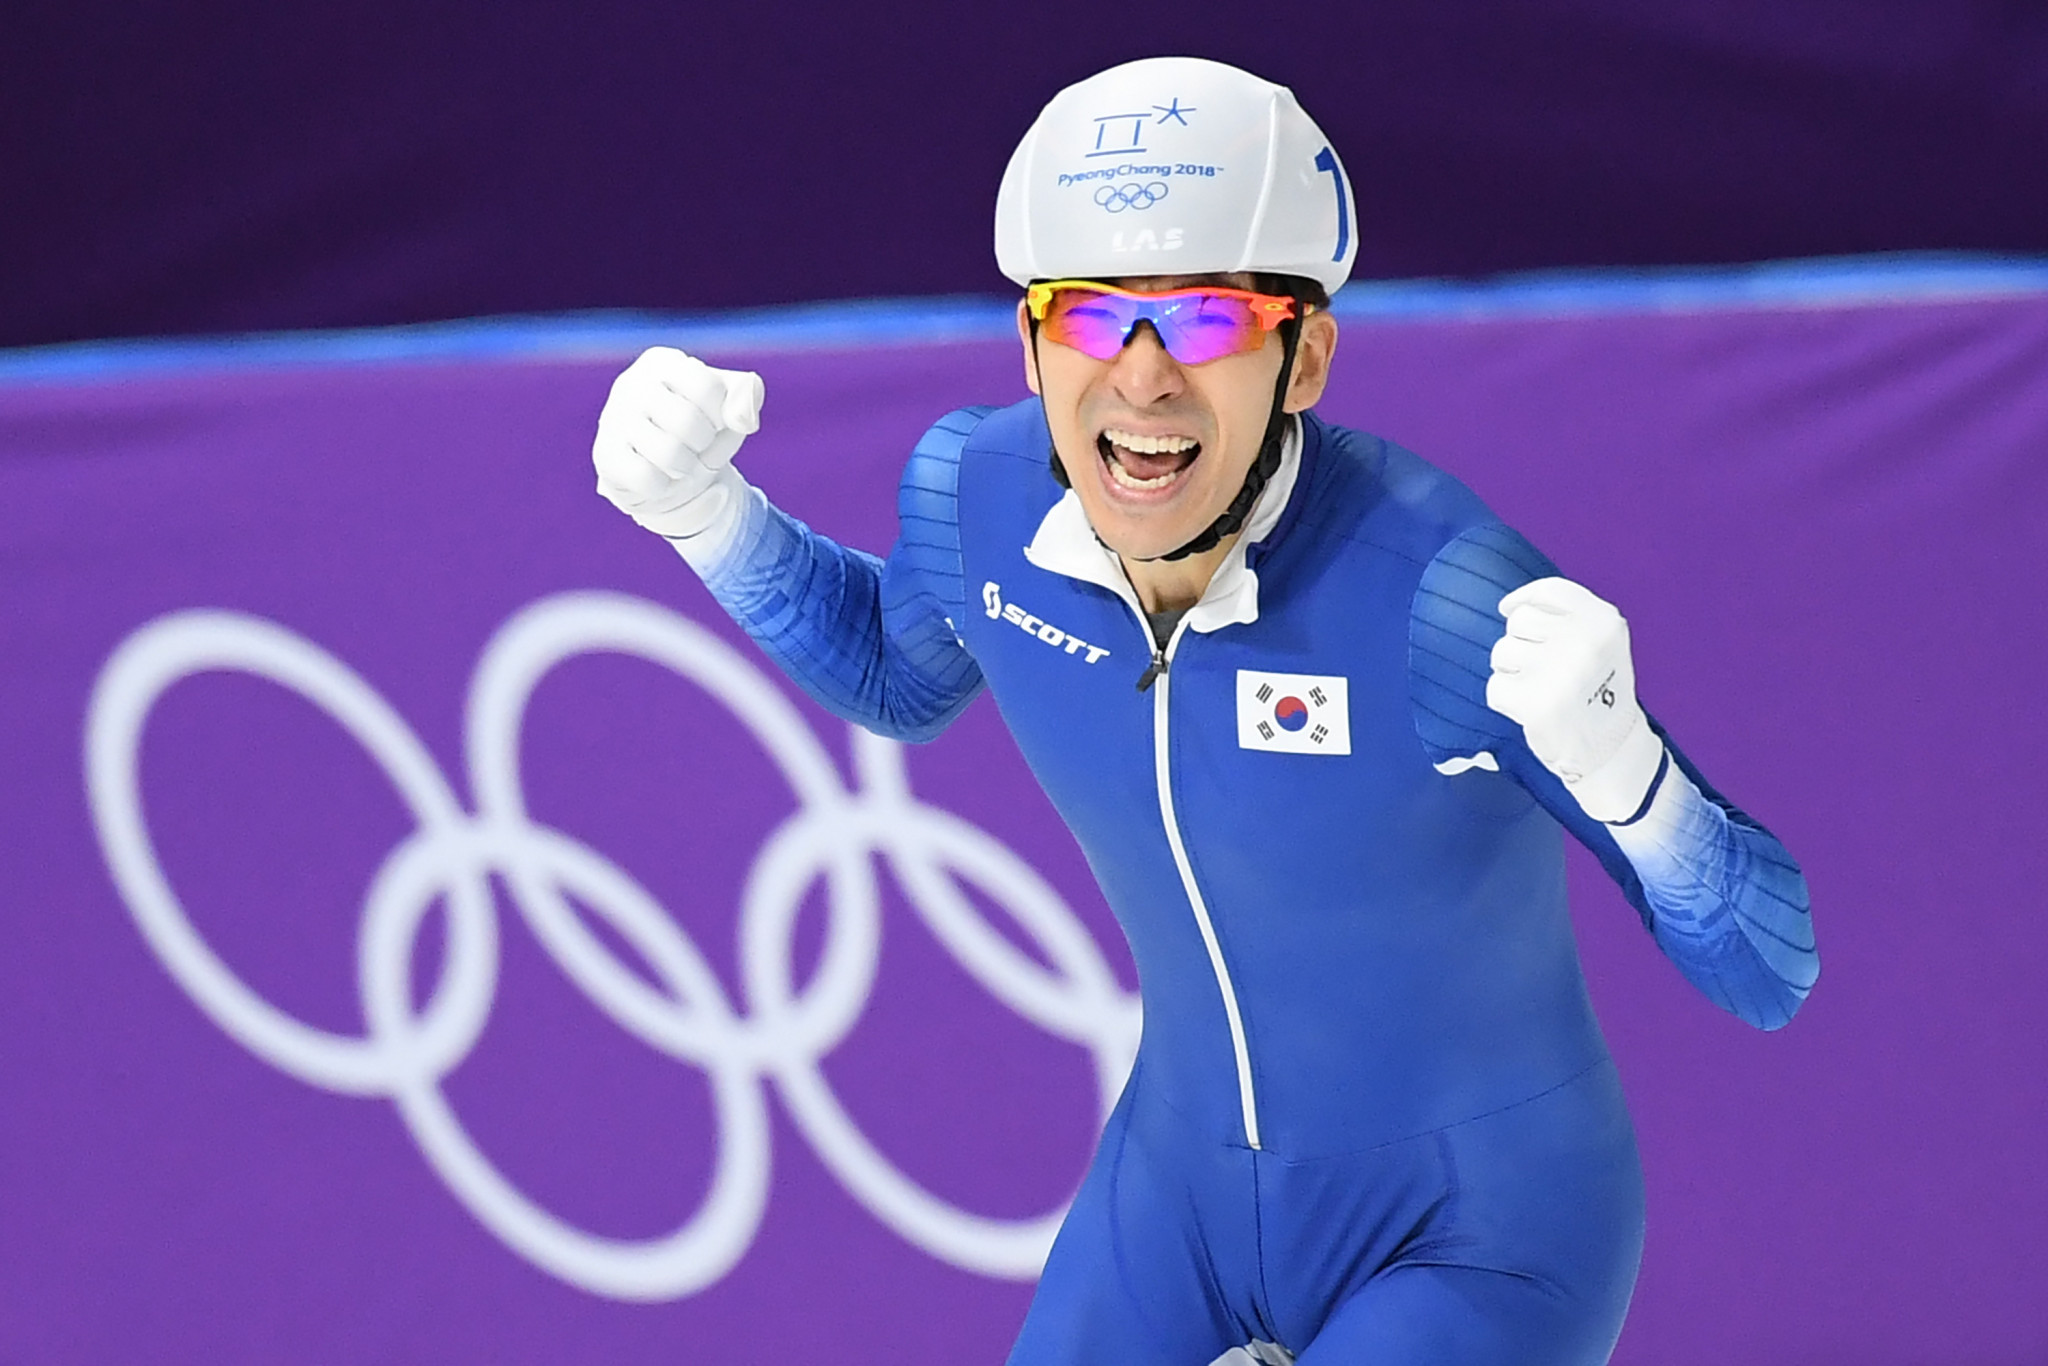 South Korea's double Olympic speed skating champion sets sights on more success at Milan Cortina 2026